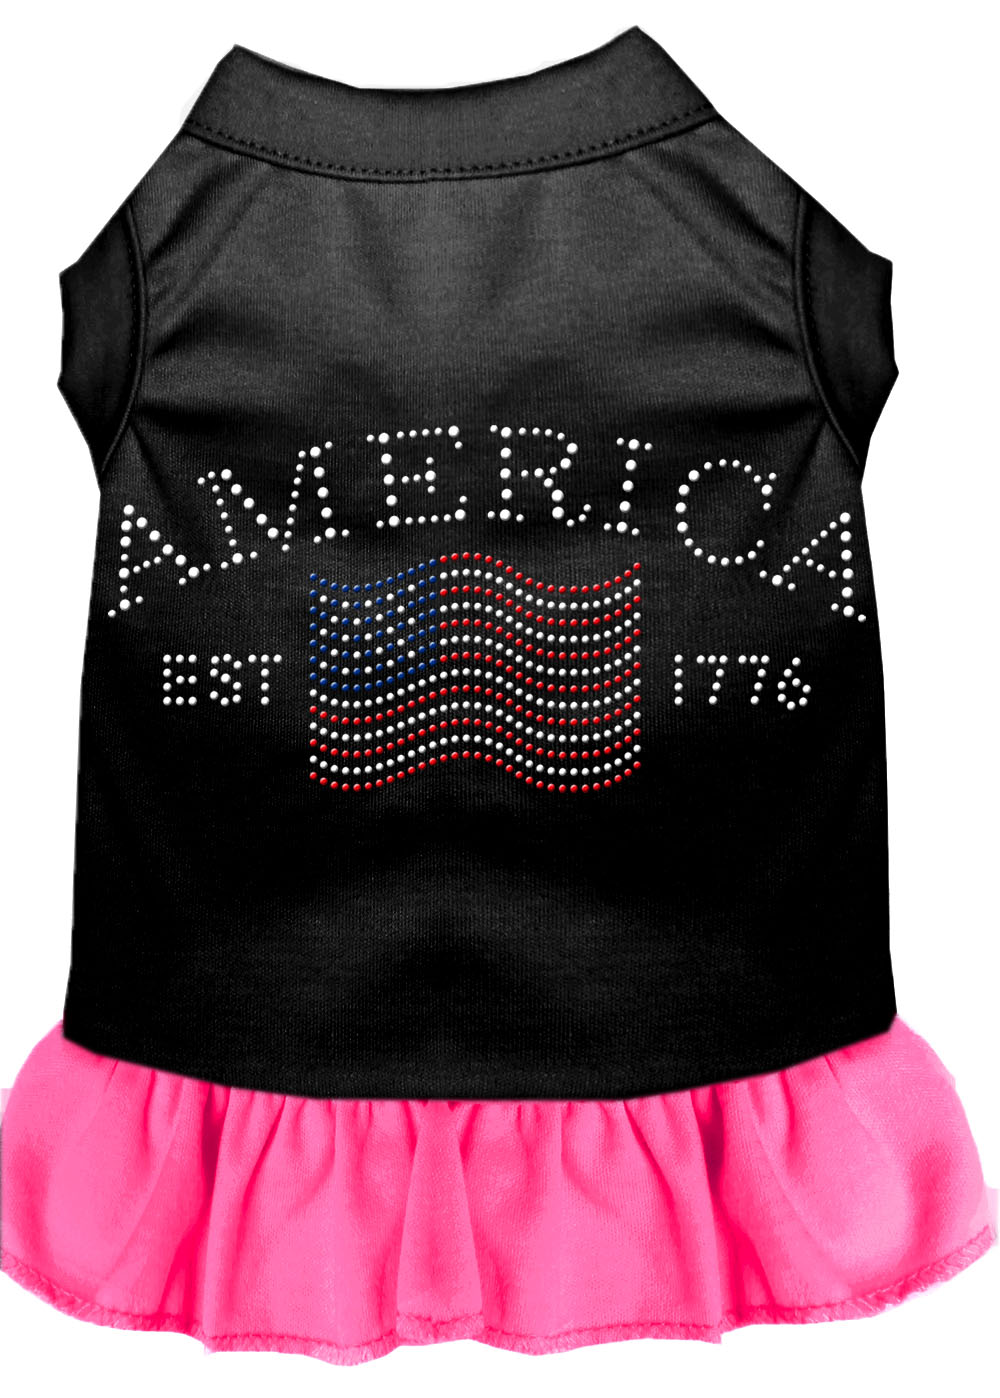 Classic America Rhinestone Dress Black with Bright Pink Lg